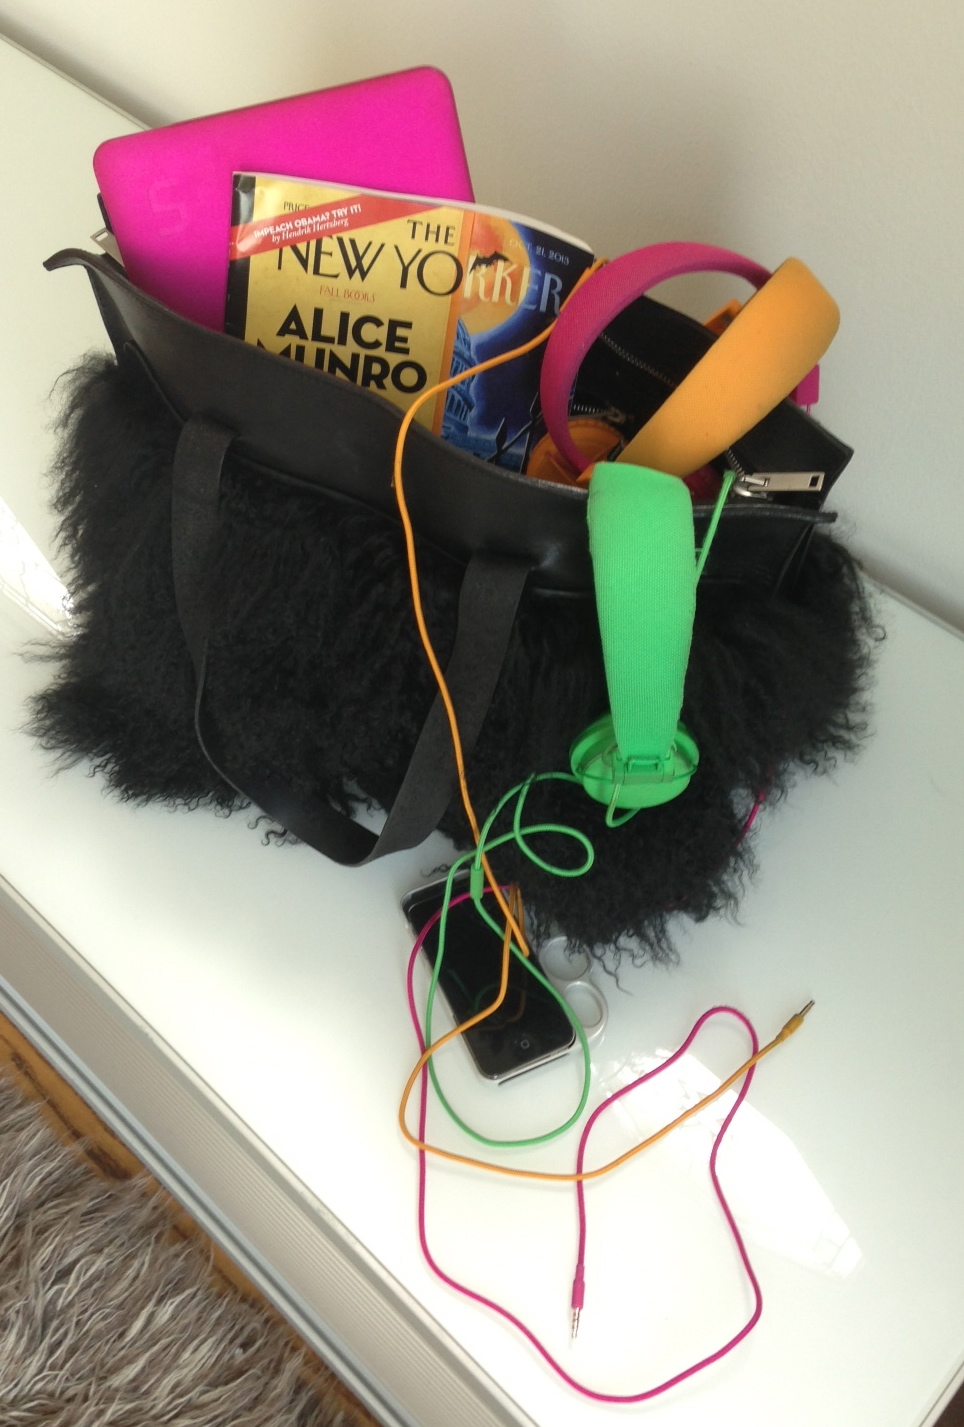 Public Transit survival kit: Gareth Pugh fur bag, Urban Ears Headphones, Knucklecase iphone case.